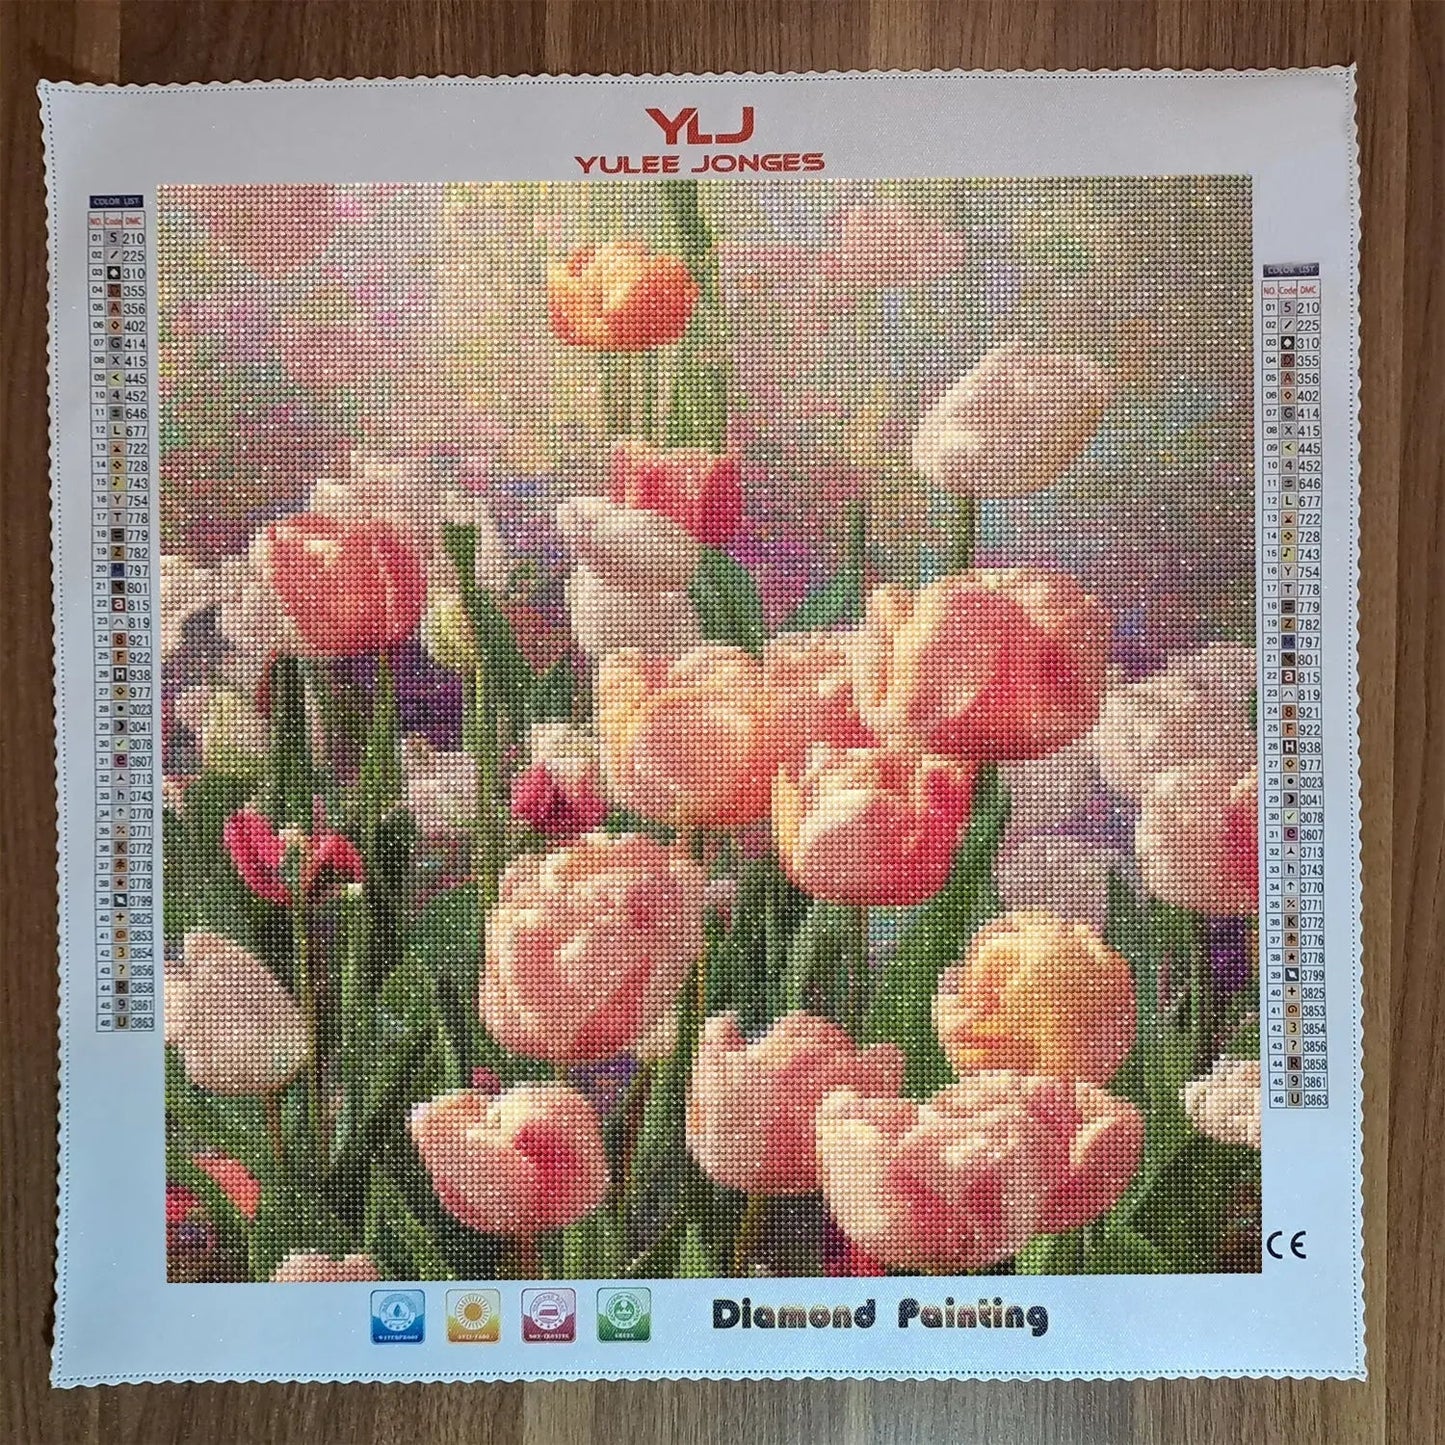 "TulipFever" - YLJ Premium Diamond Painting Kit - YuLee Jonges